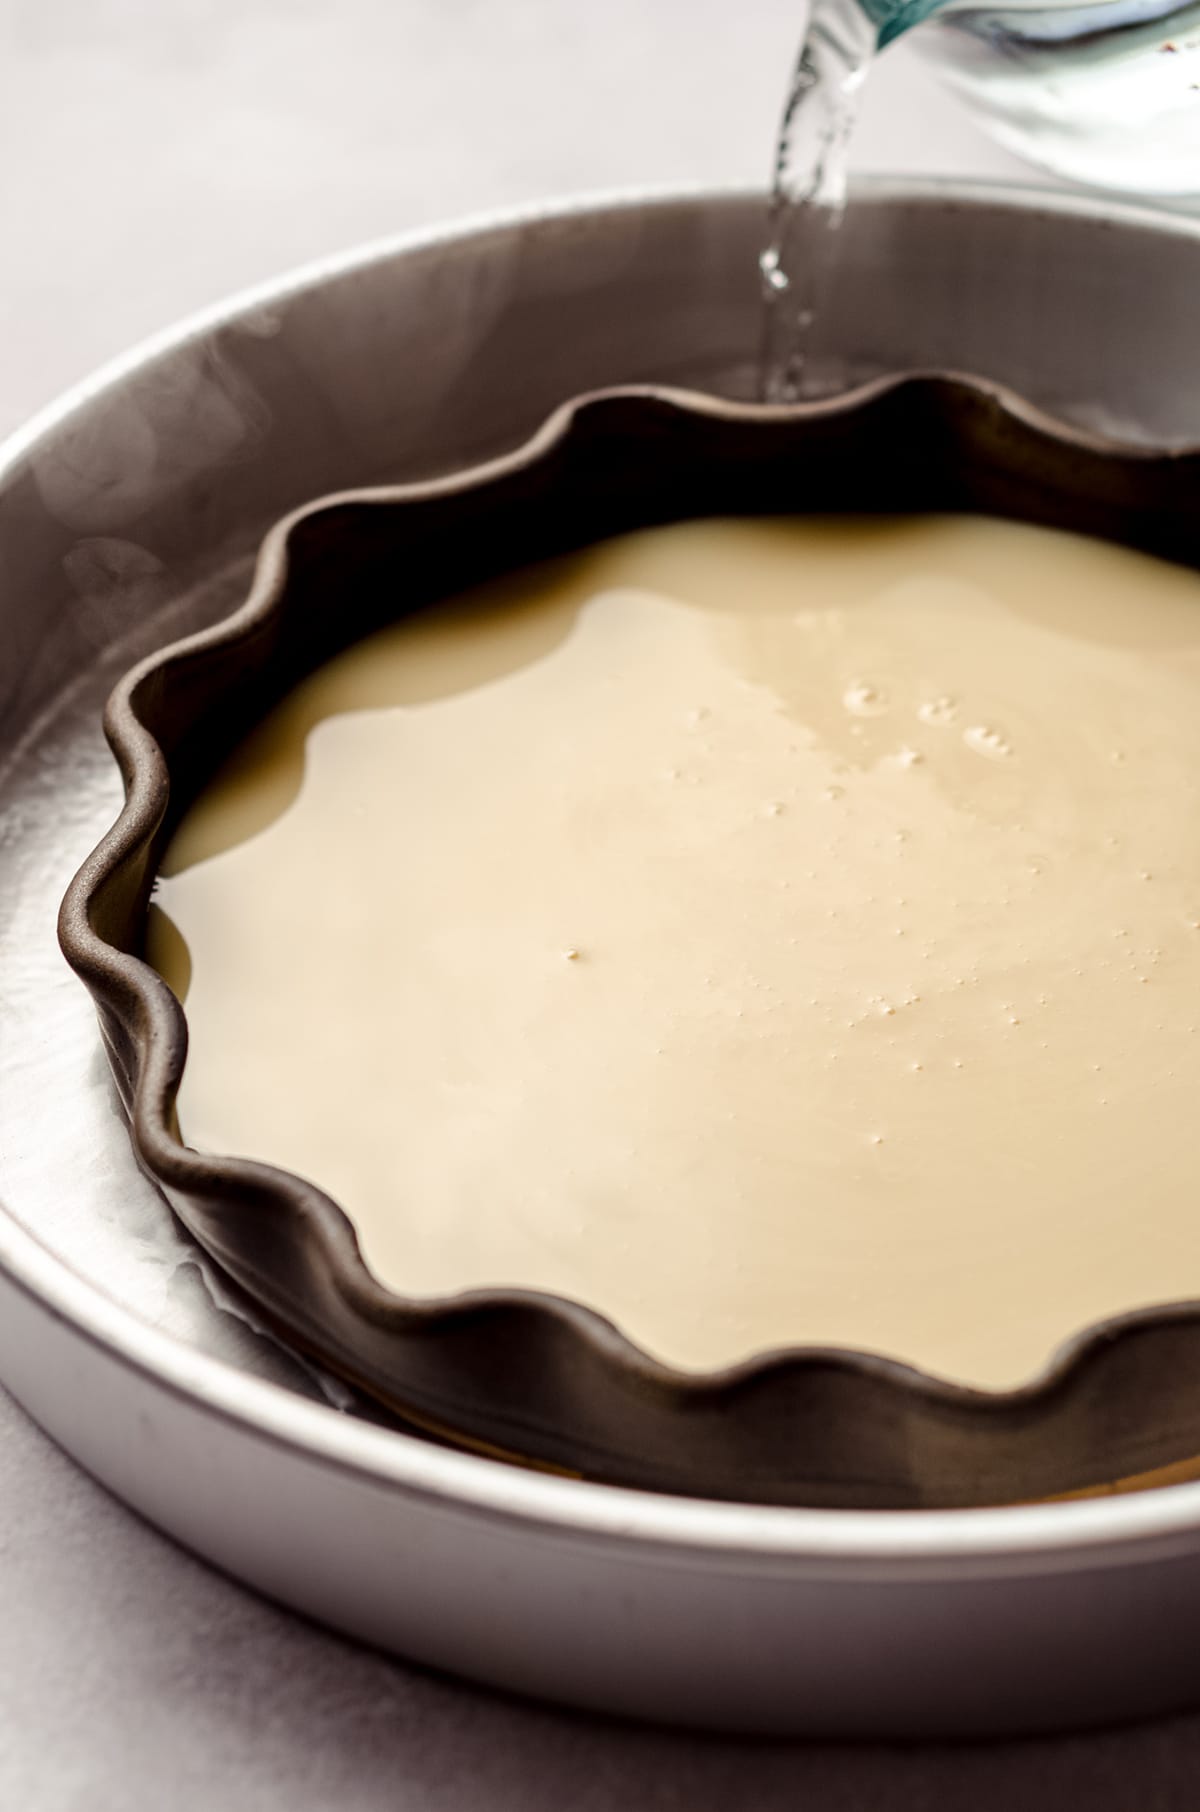 sweetened condensed milk in a pie plate to make dulce de leche